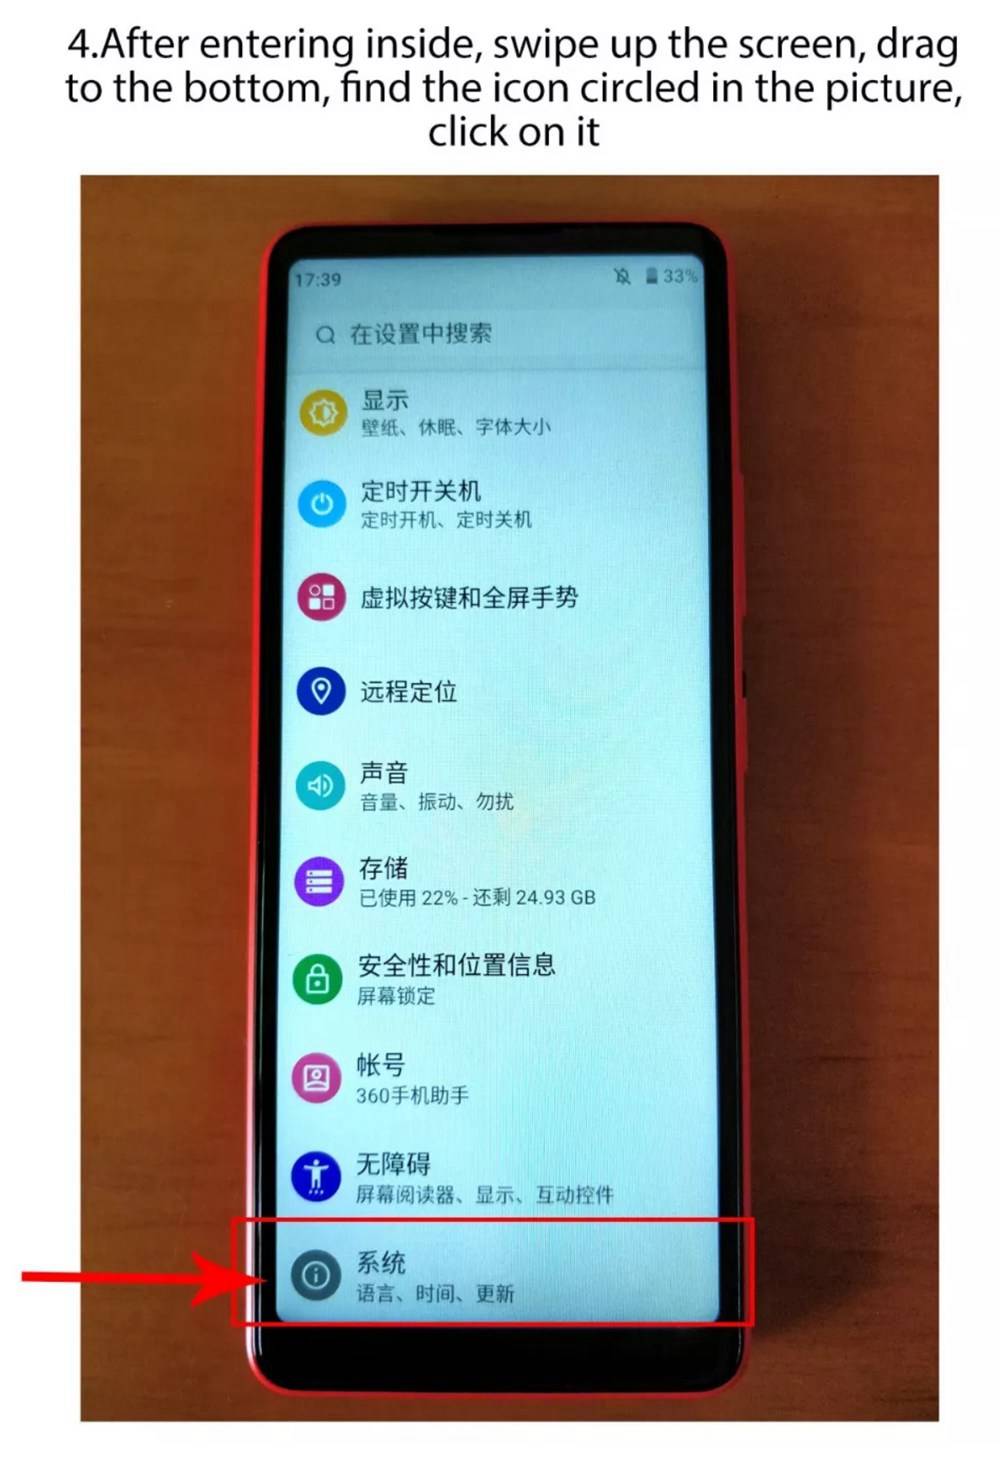 QIN Full Screen Bar Phone 4G LTE 5.05 Inch FHD+ Screen 1GB RAM 32GB ROM Android 9.0 - Gray